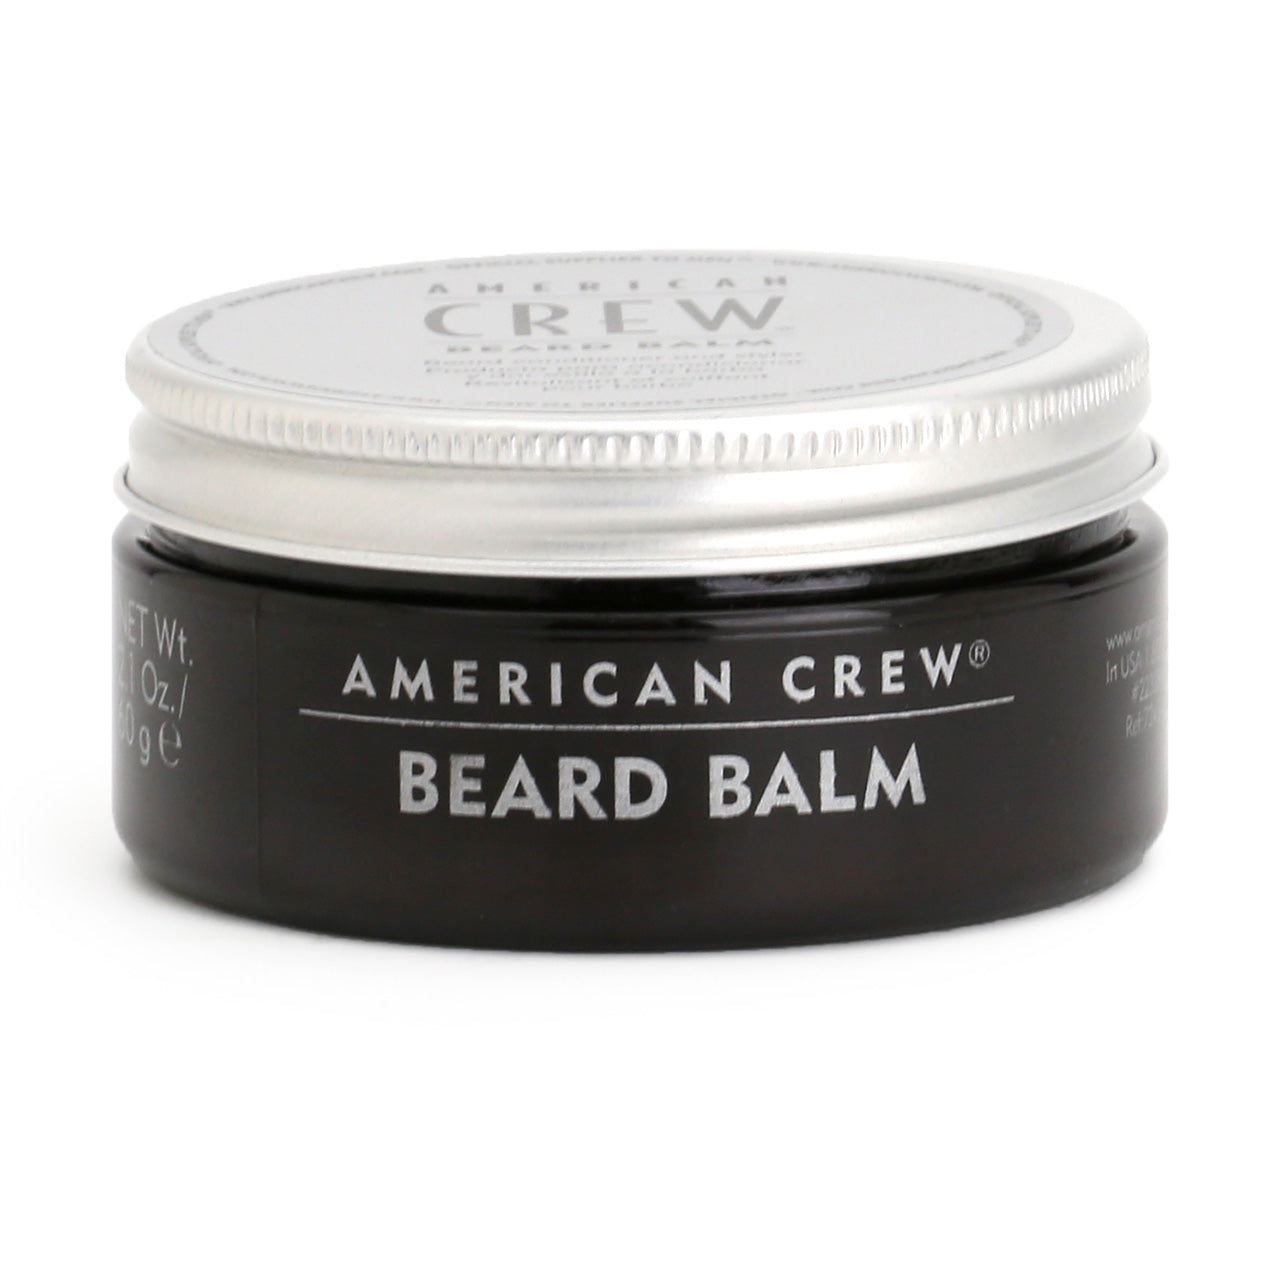 American Crew Beard Balm side view of tub